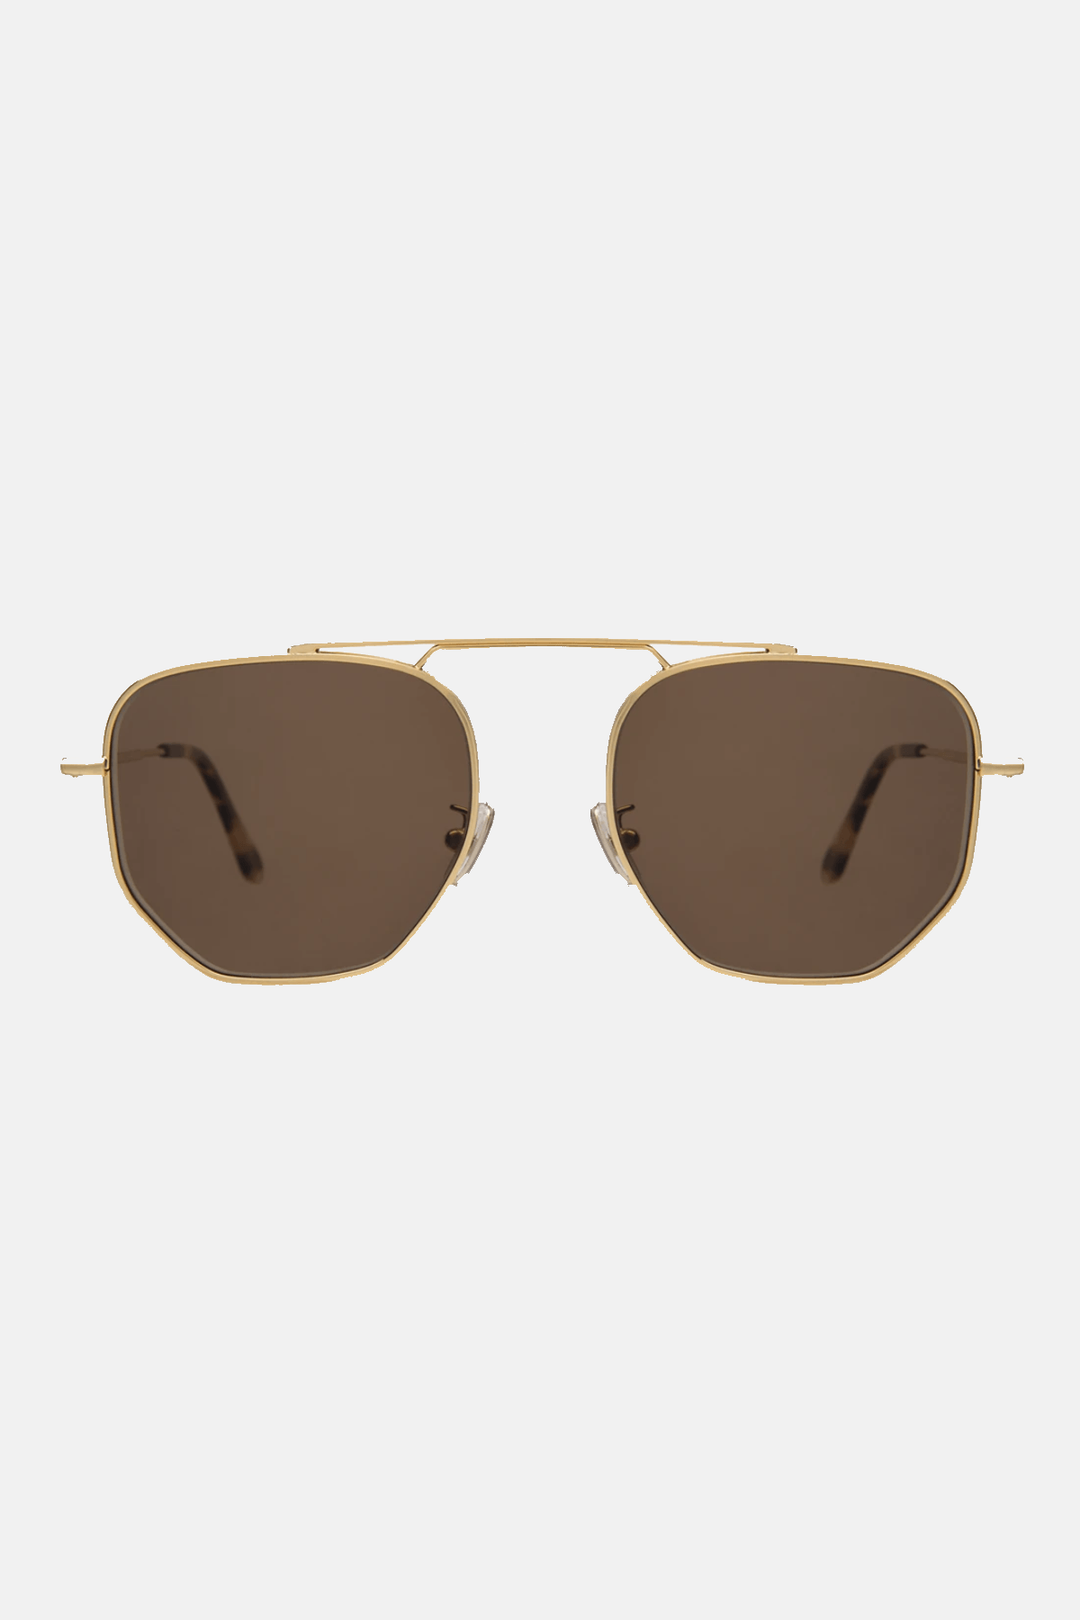 Patmos Sunglasses Gold/Brown Flat - blueandcream